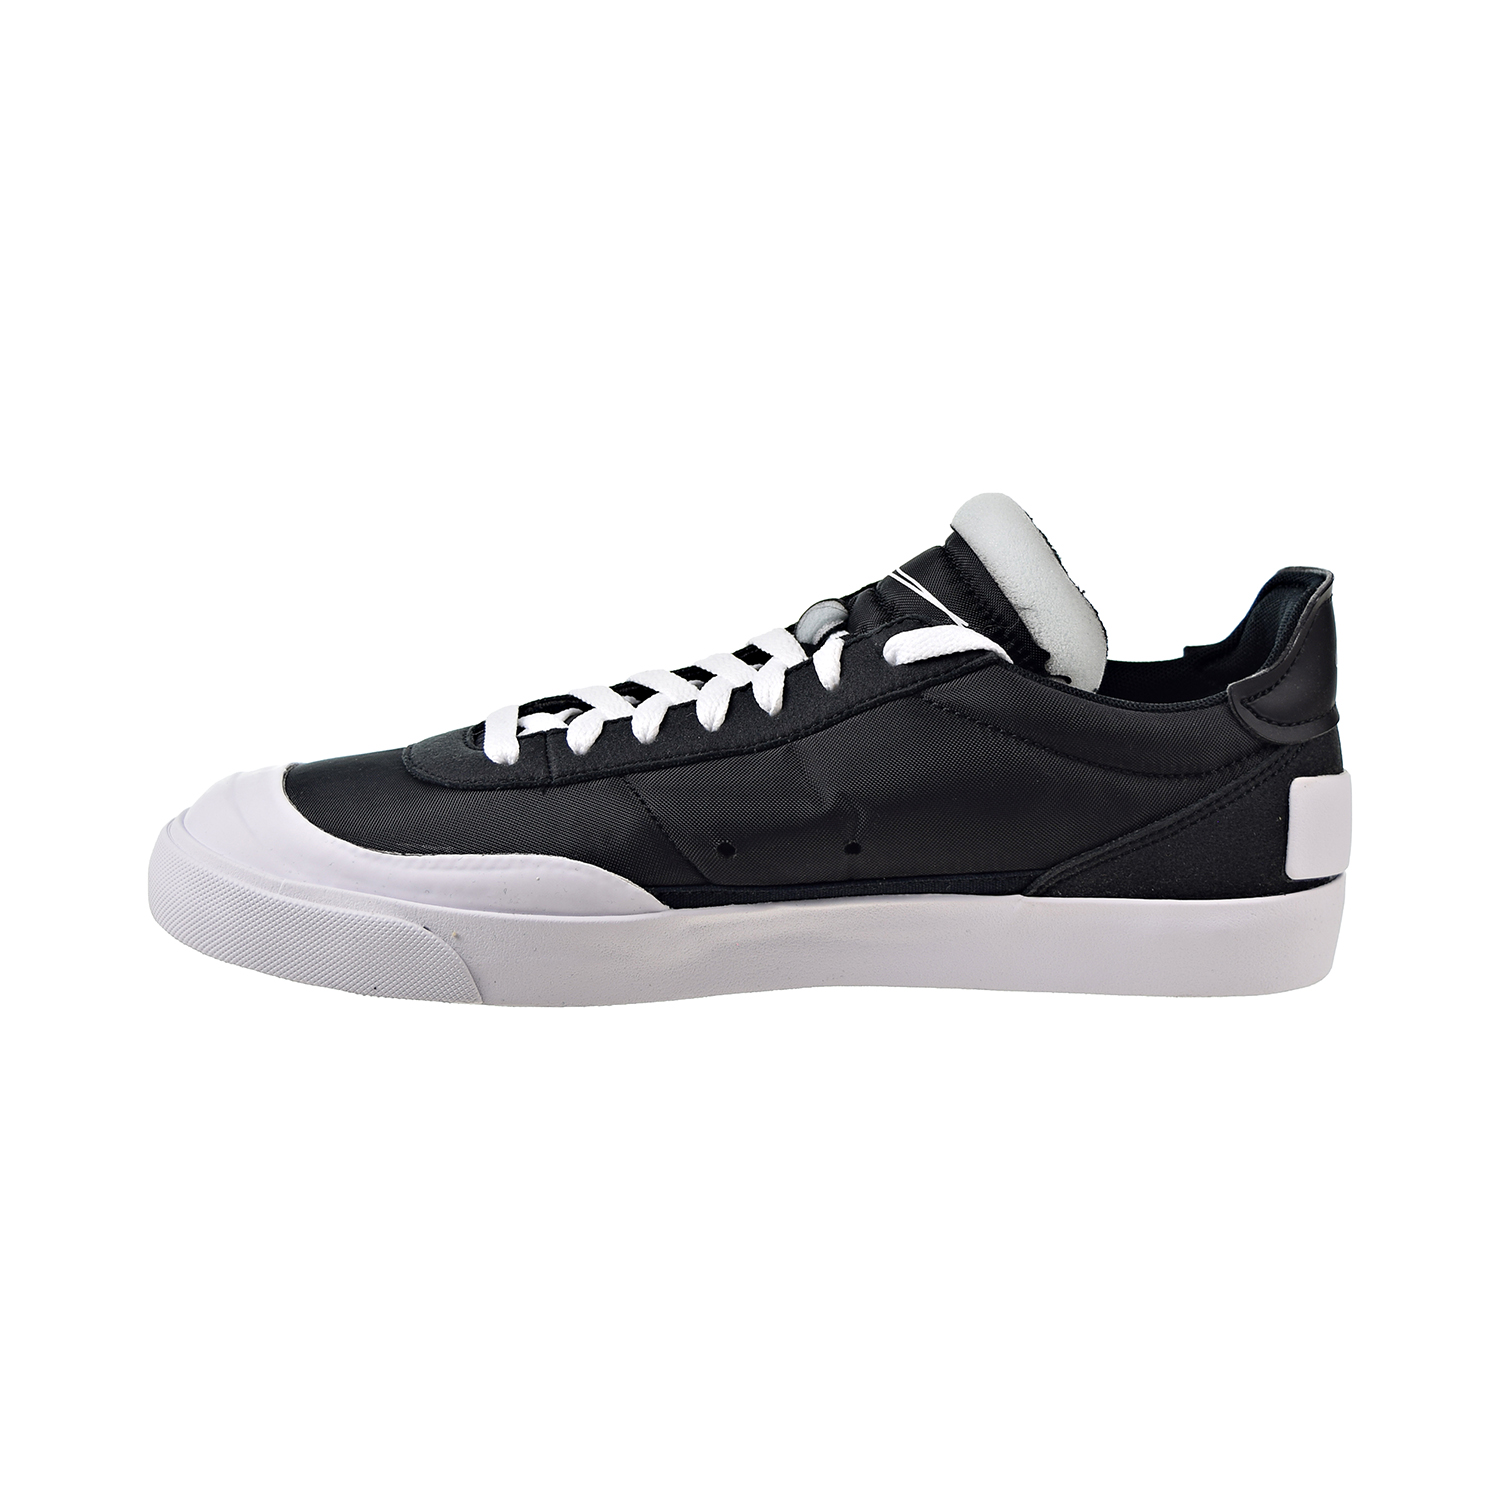 Nike Drop-Type Hybrid Men's Shoes Black-White cq0989-002 - image 4 of 6